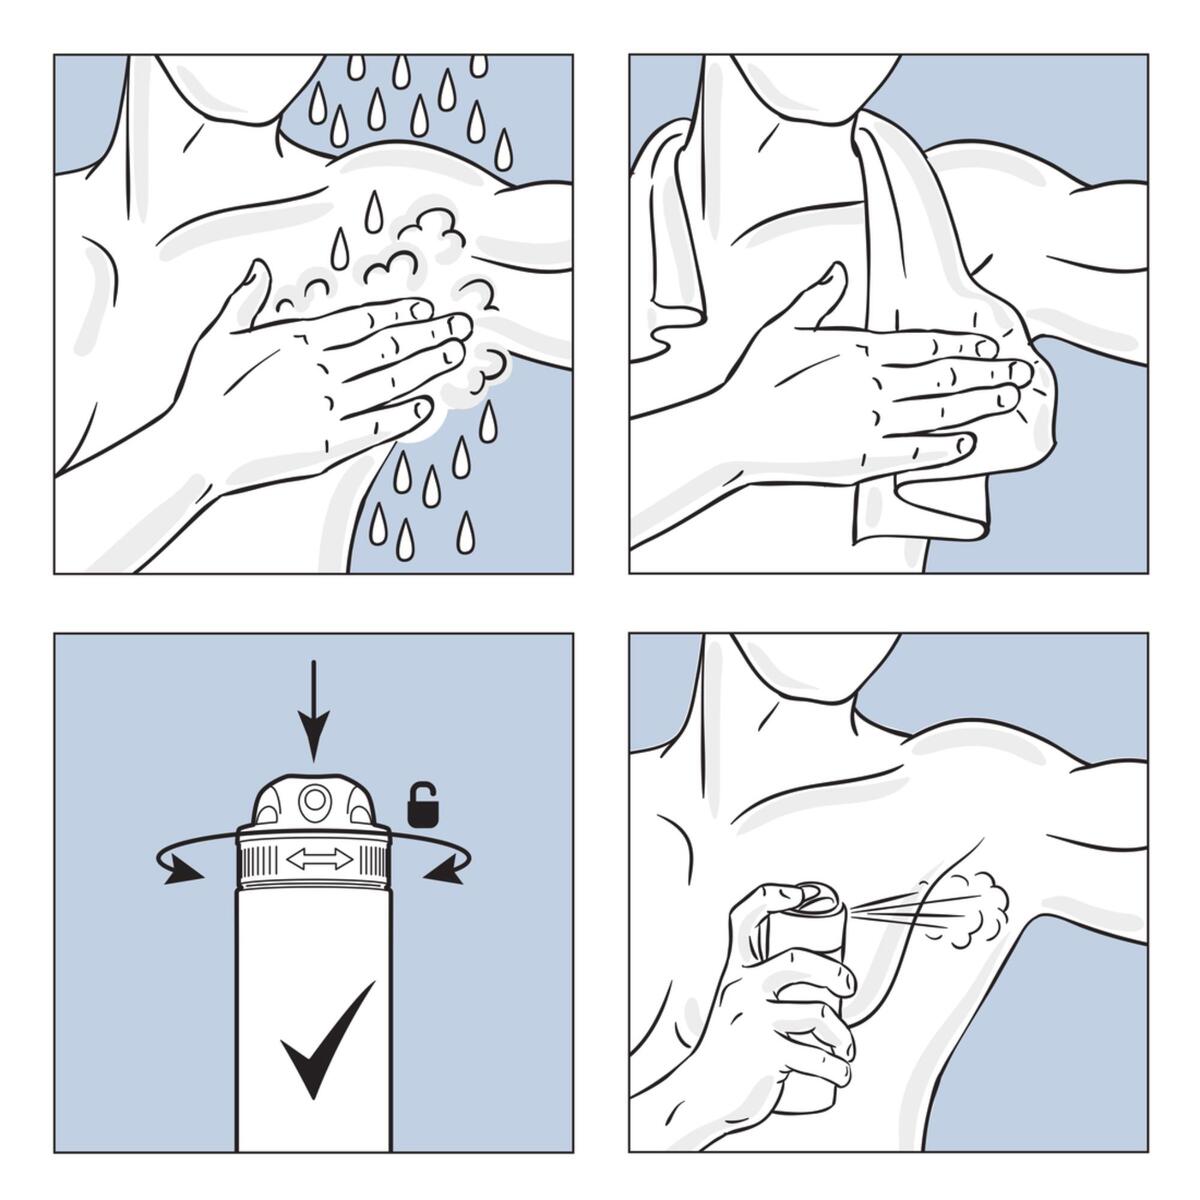 Rexona Men Antiperspirant Deodorant Spray Maximum Protection Confidence 150 ml